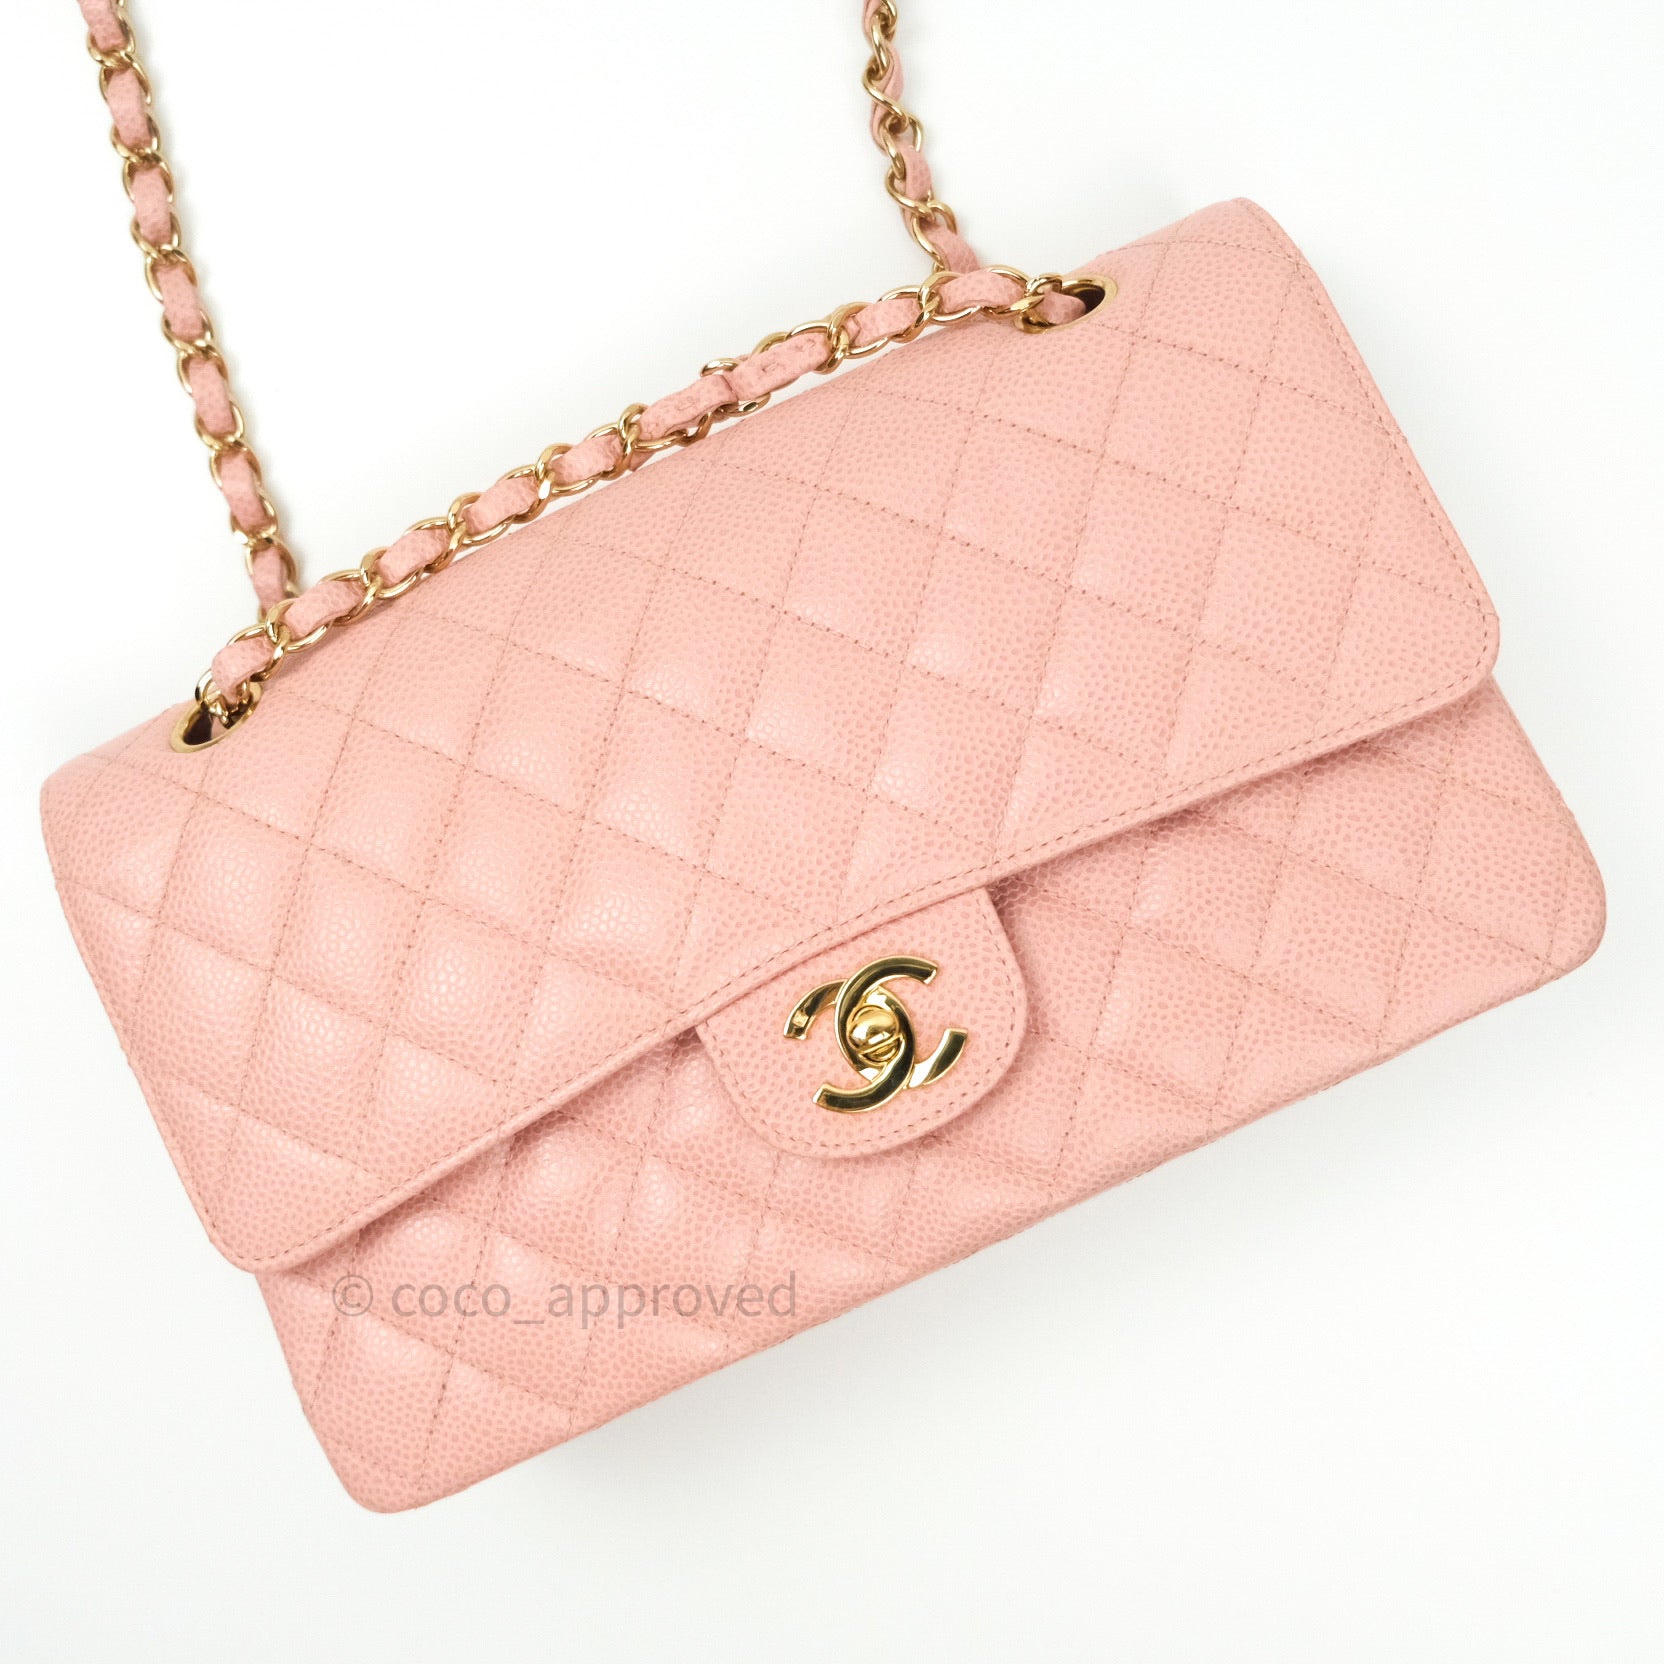 Chanel Gold Patent Striated Medium Classic Flap Bag